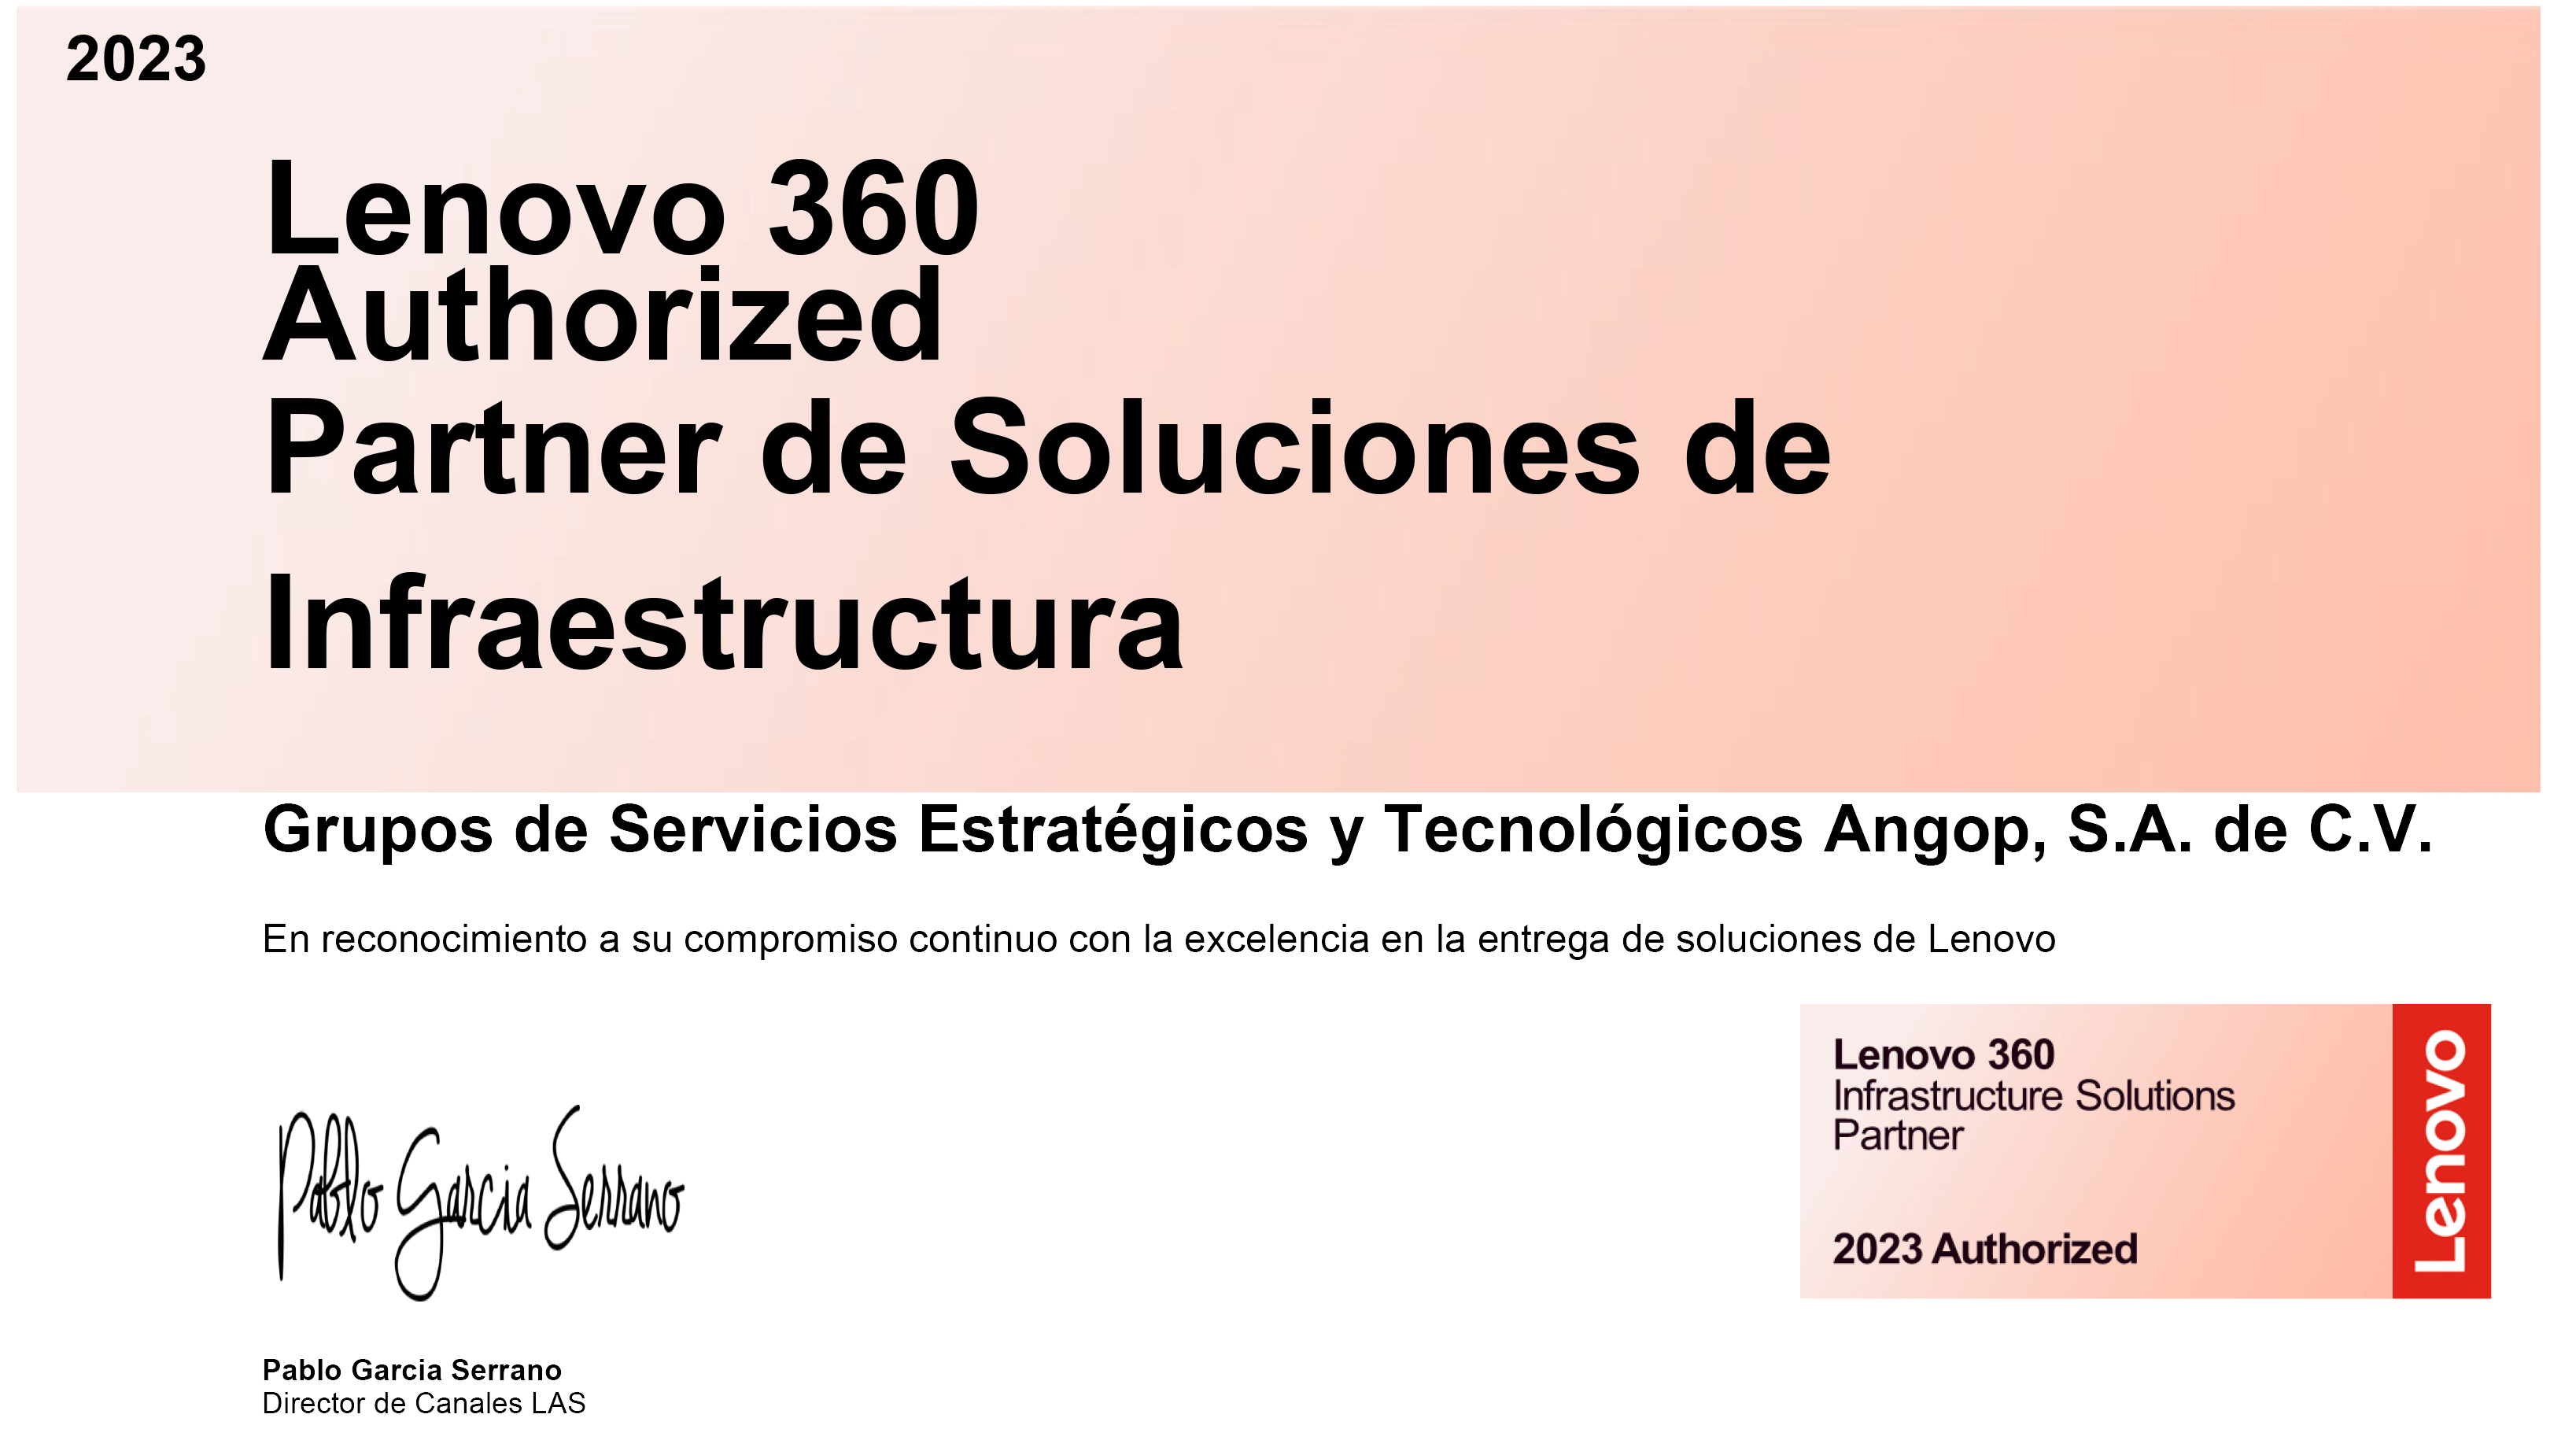 Autorizado Infraestructura 2023